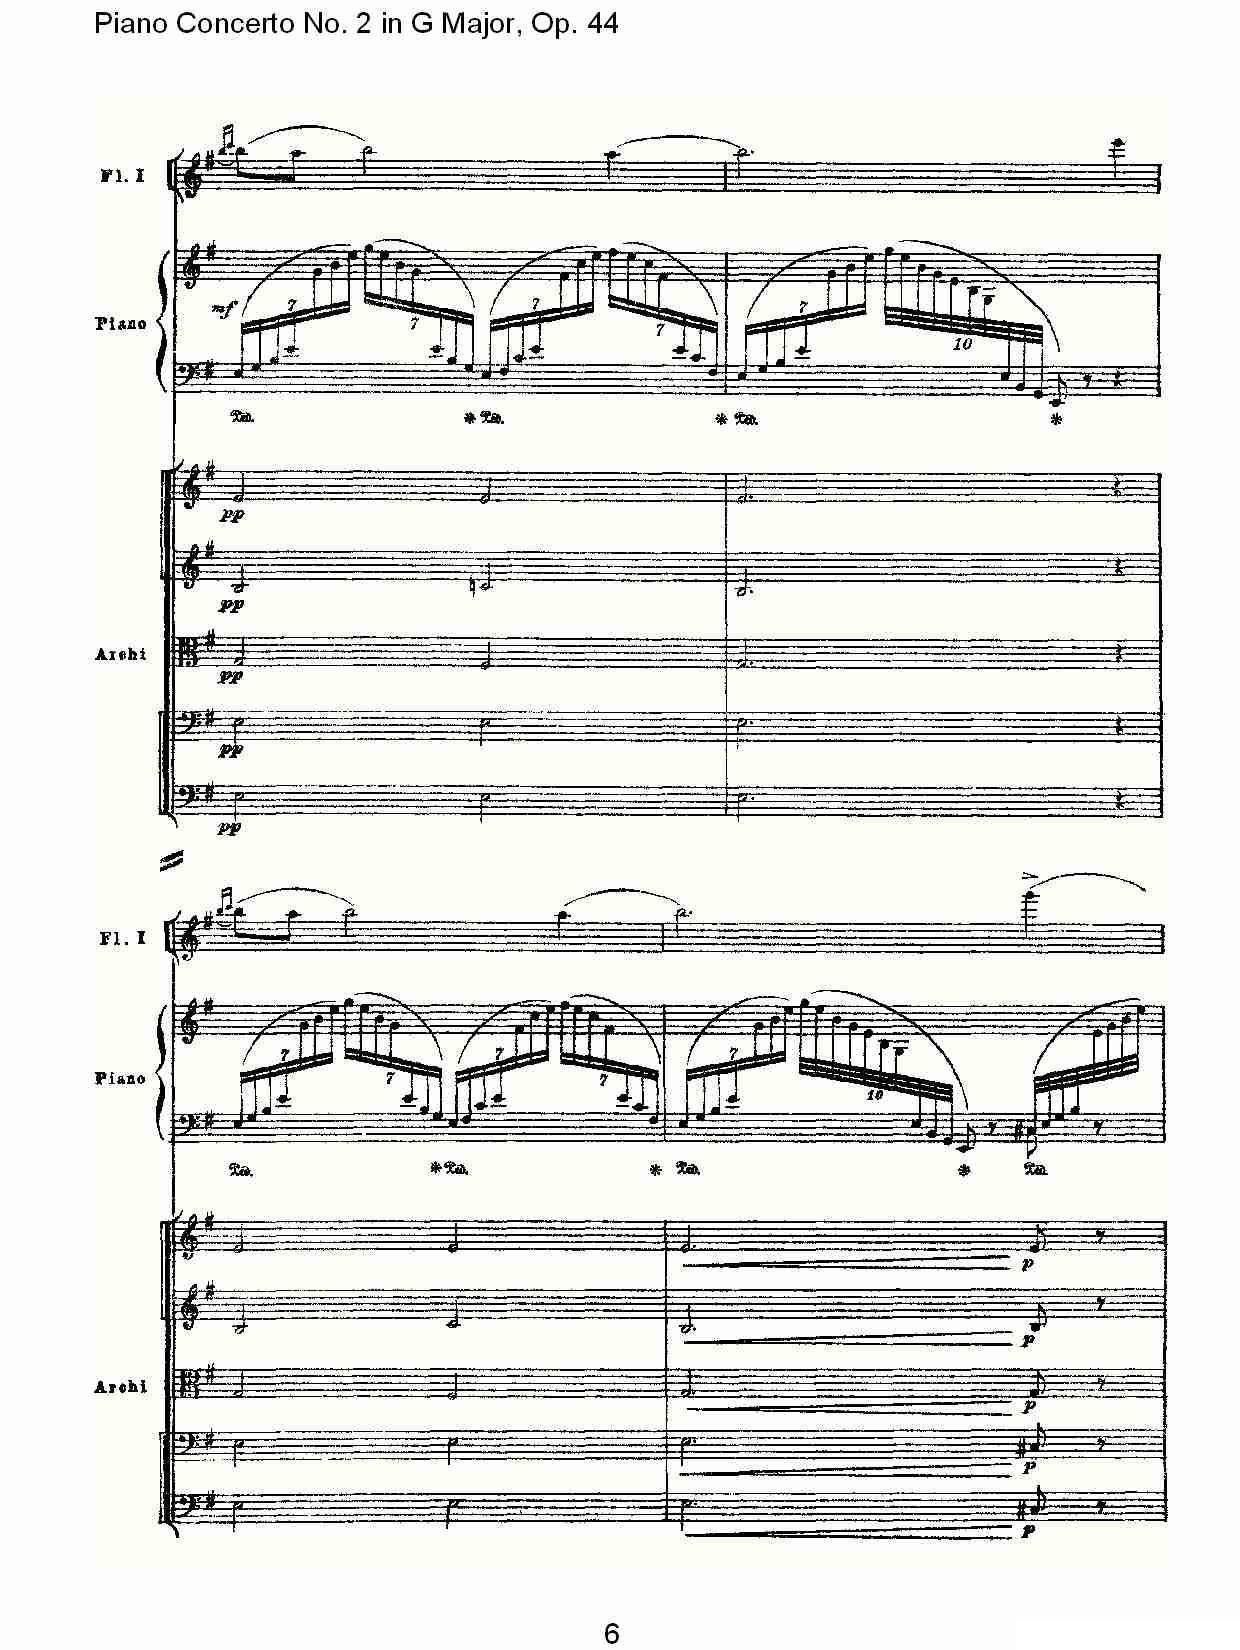 G大调第二钢琴协奏曲, Op.44第一乐章（一）钢琴曲谱（图6）